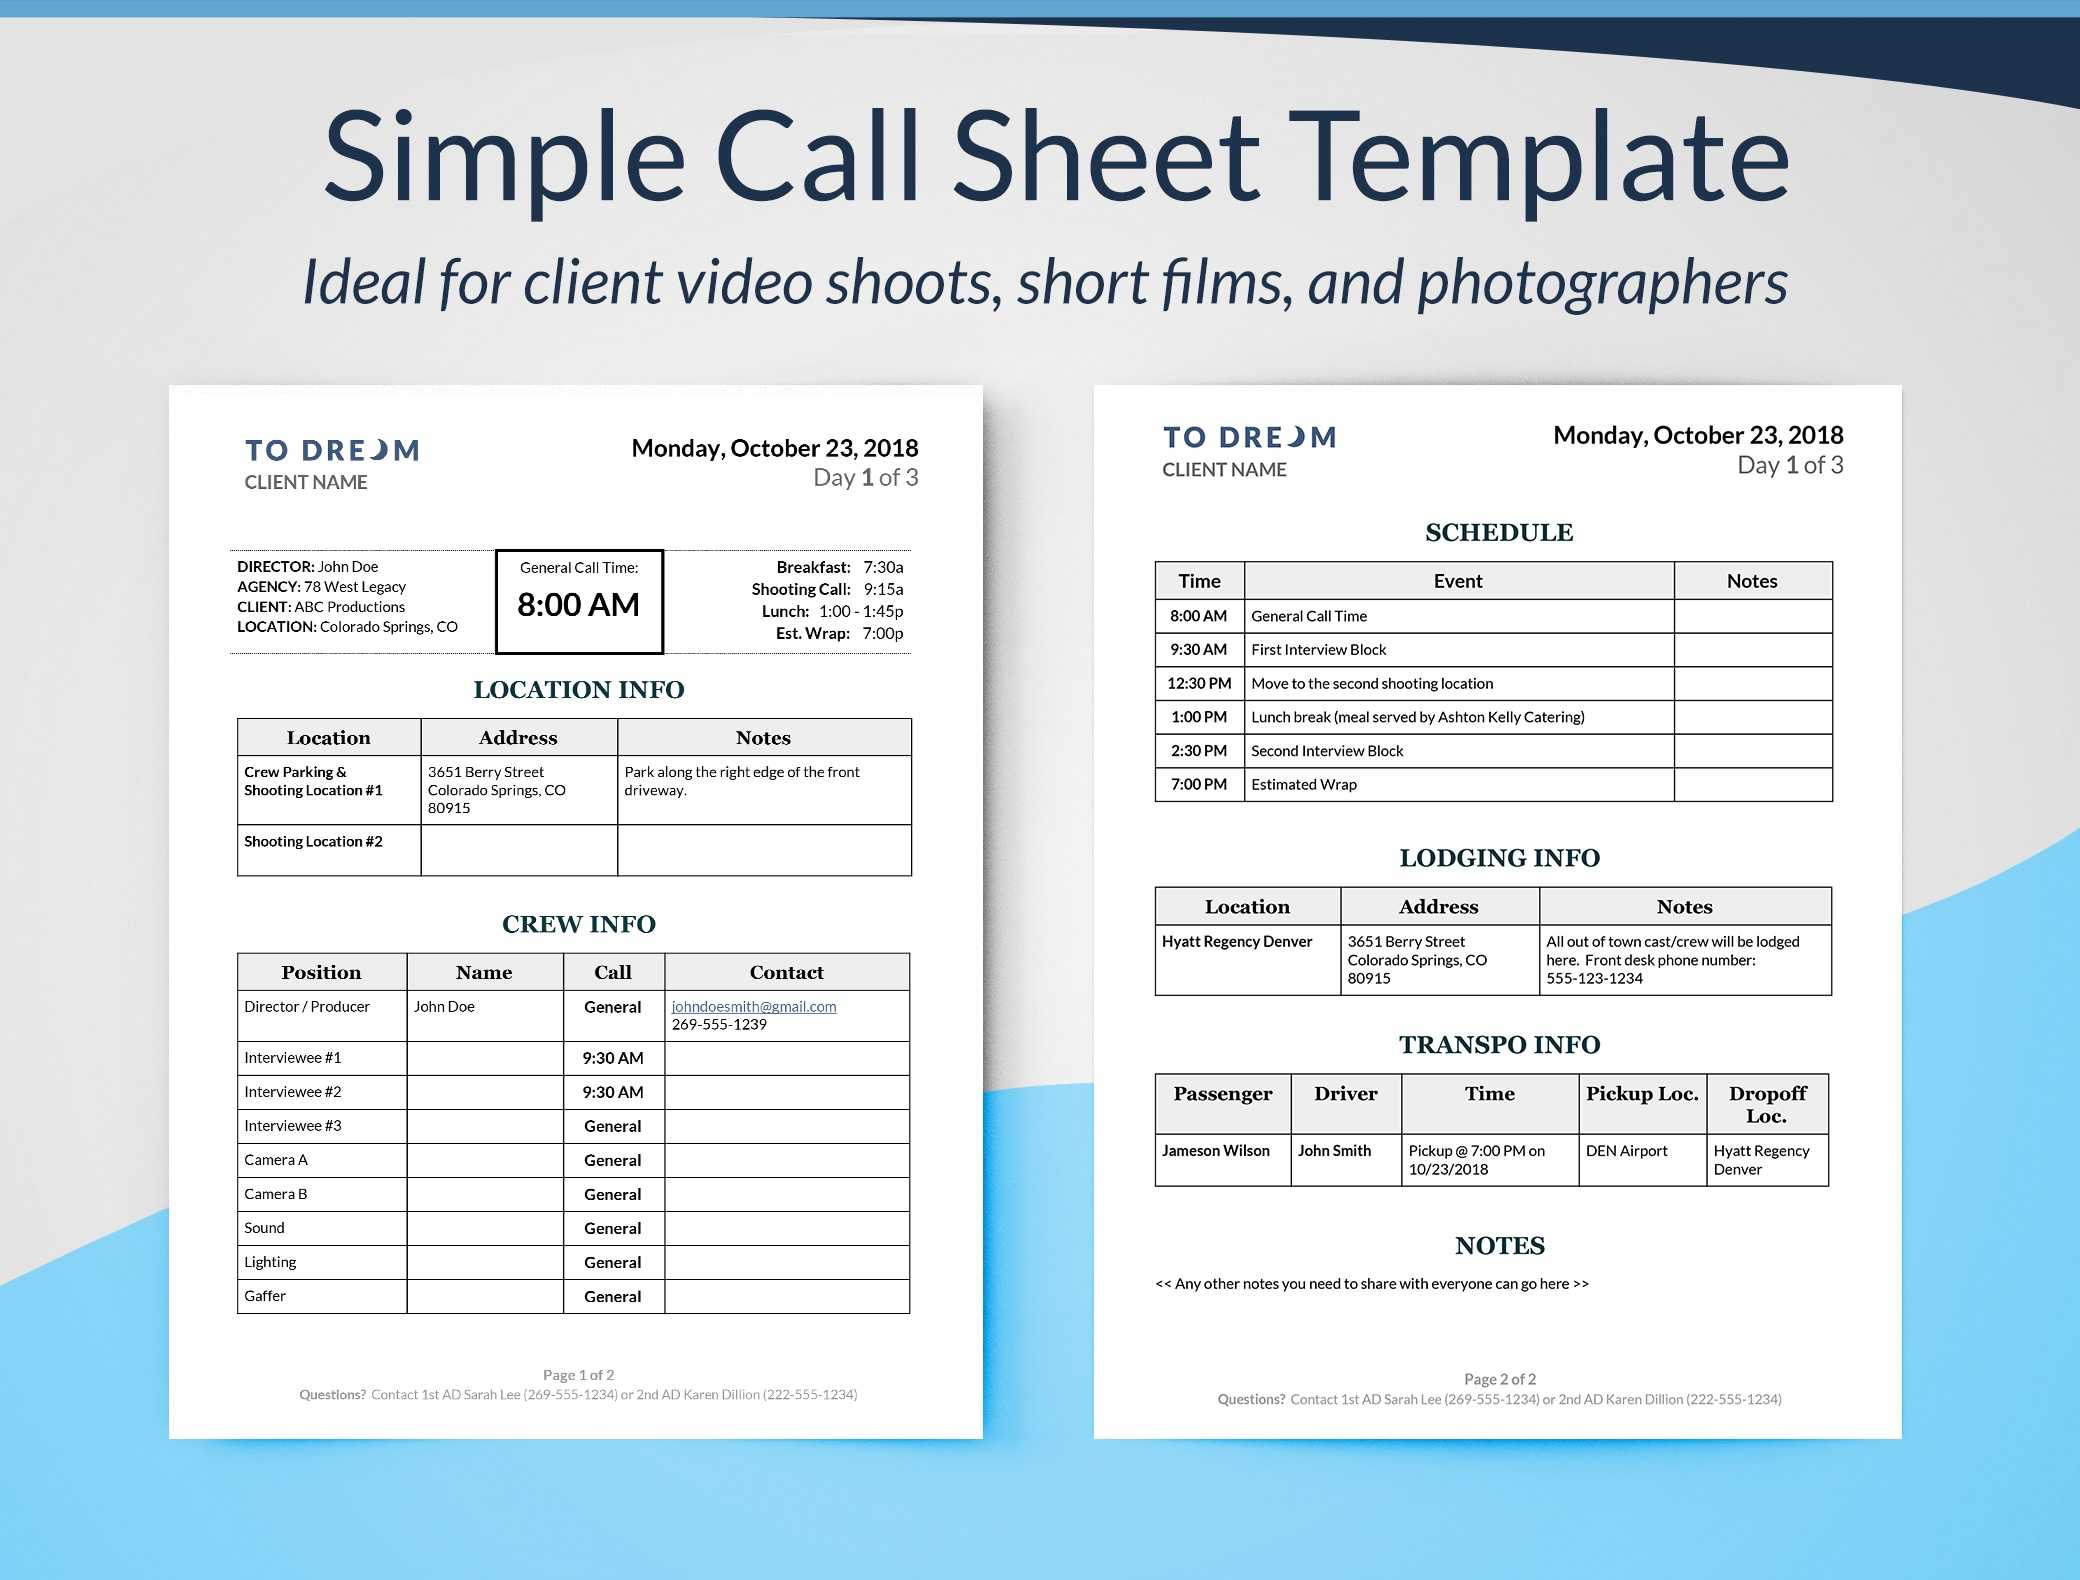 Simple Call Sheet Template Word Doc | Sethero With Regard To Film Call Sheet Template Word